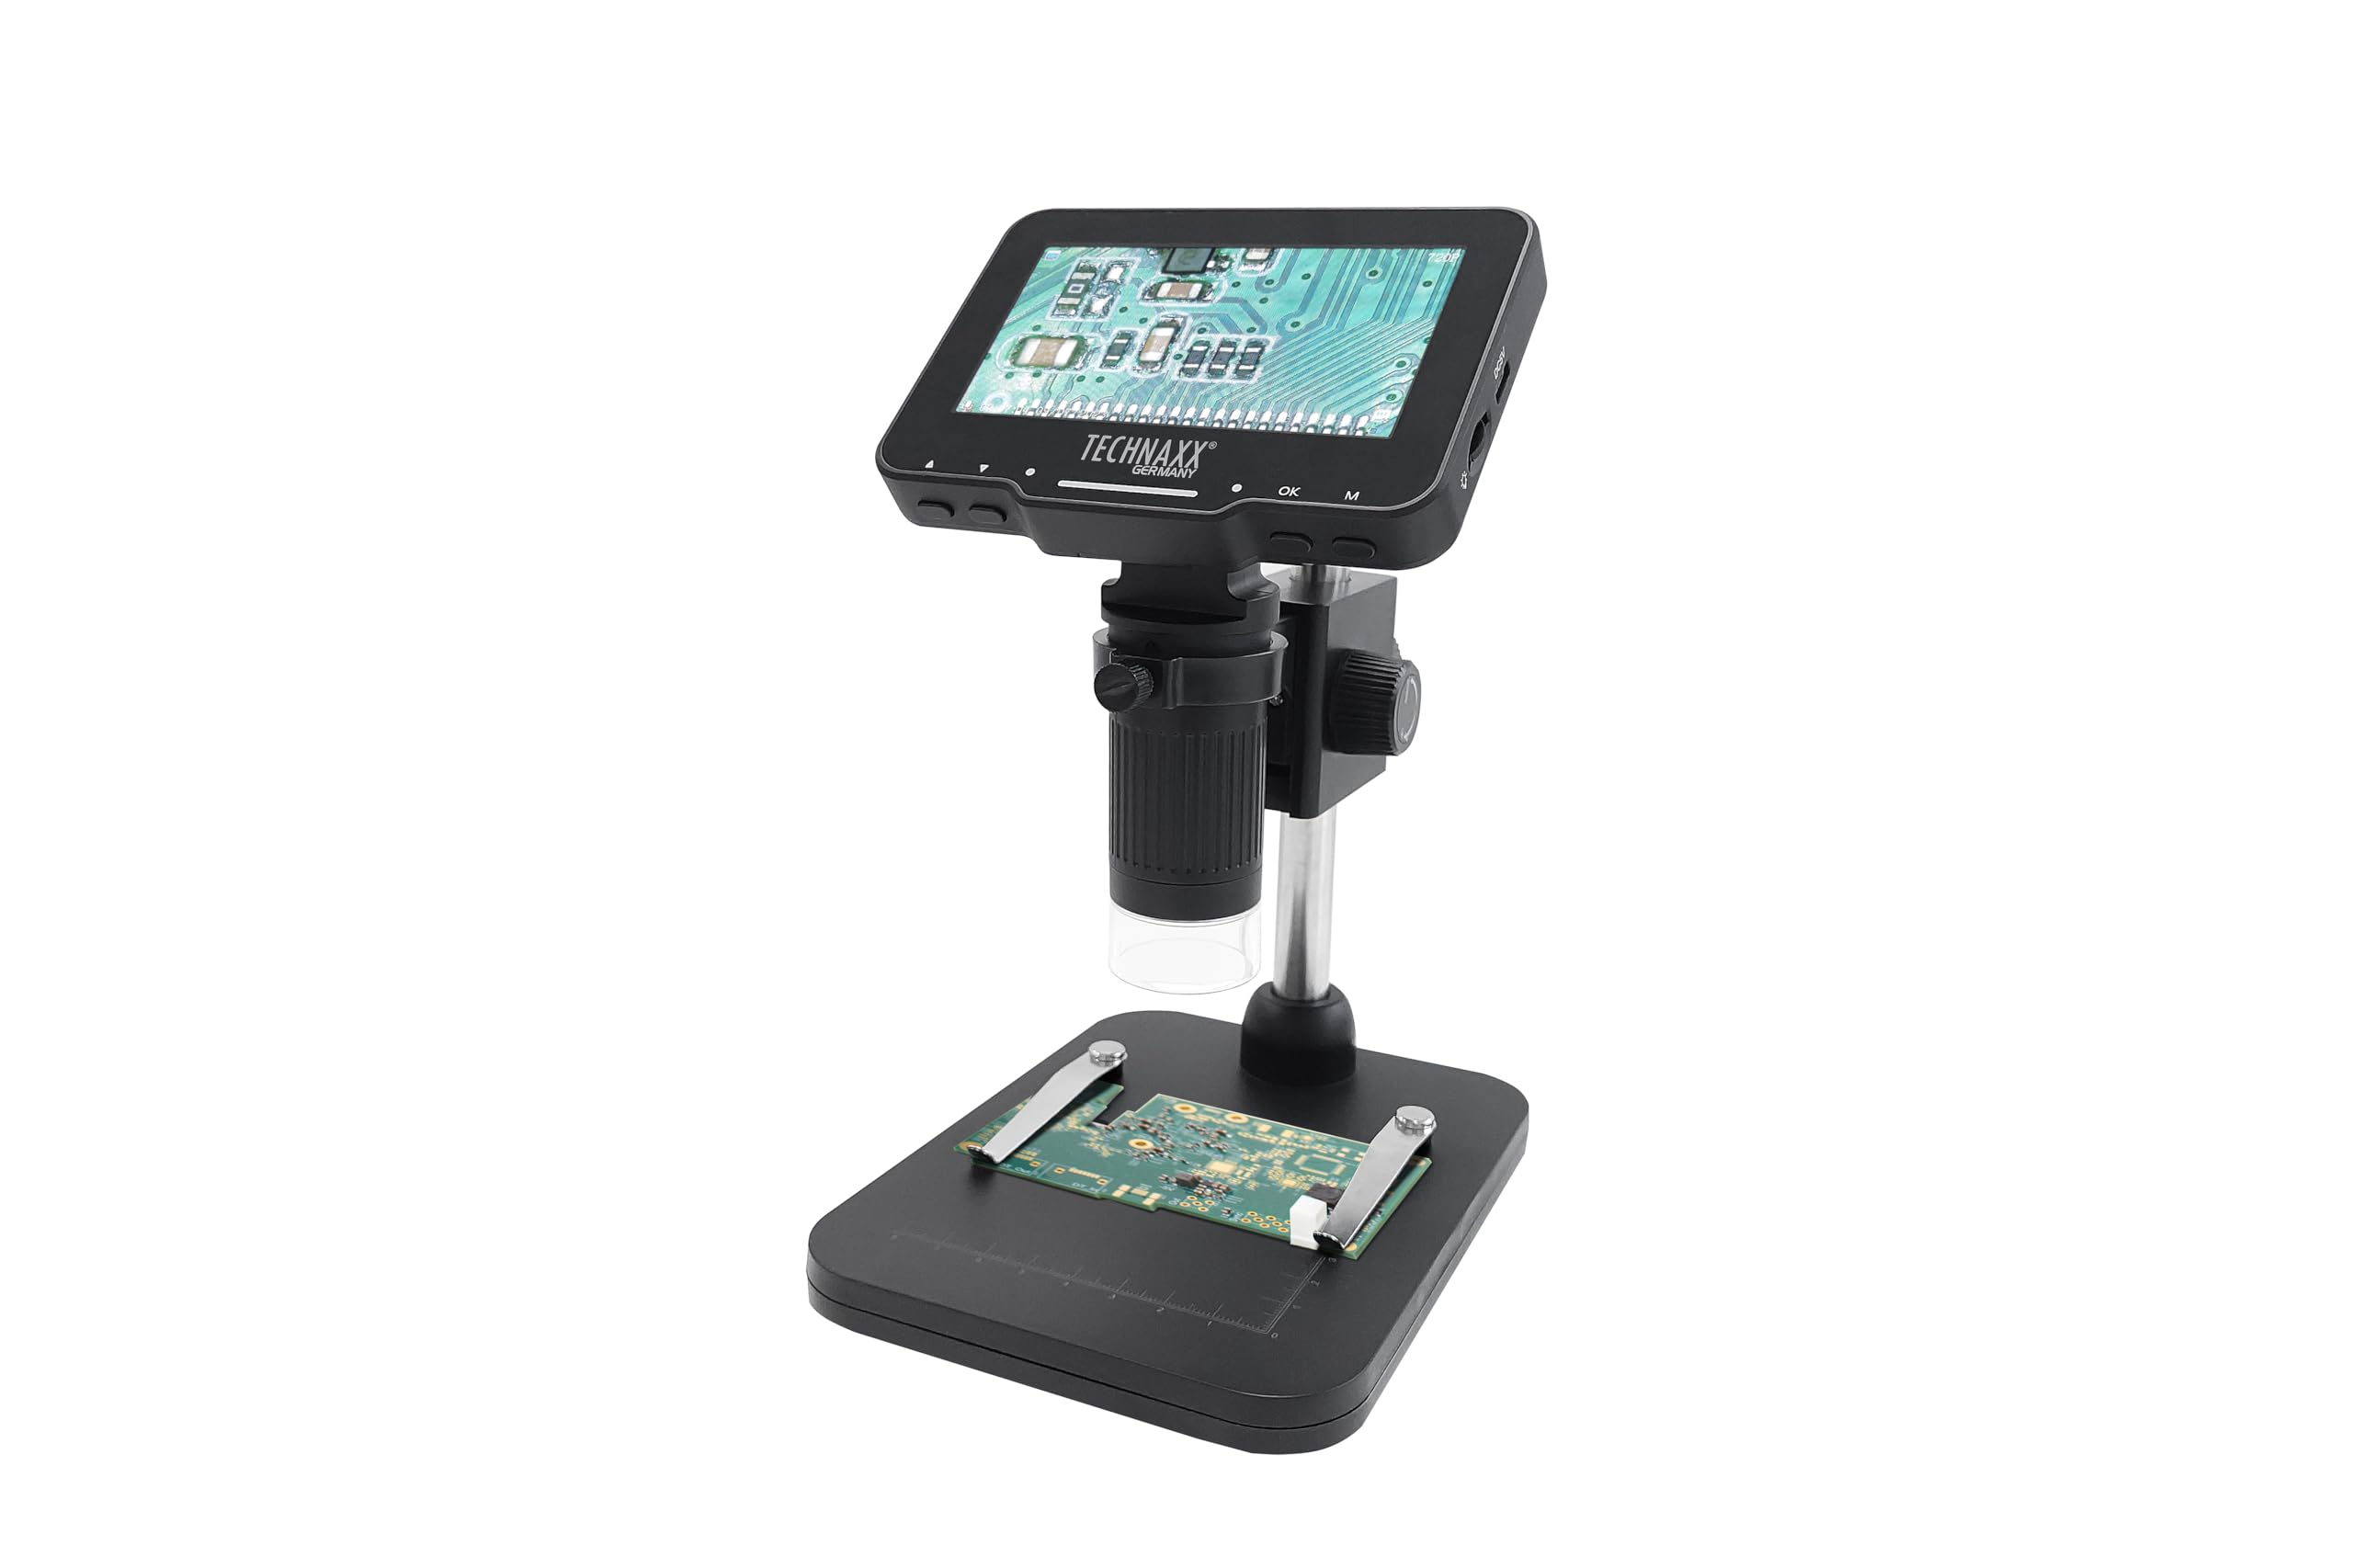 Technaxx Digitalmikroskop Pro TX-277-50-fache Vergrößerung, 4,3-Zoll-IPS-Display, Verstellbarer Winkel & Halterung, 8 LED-Beleuchtung, Foto-/Videoaufnahme, MicroSD- & PC-Konnektivität